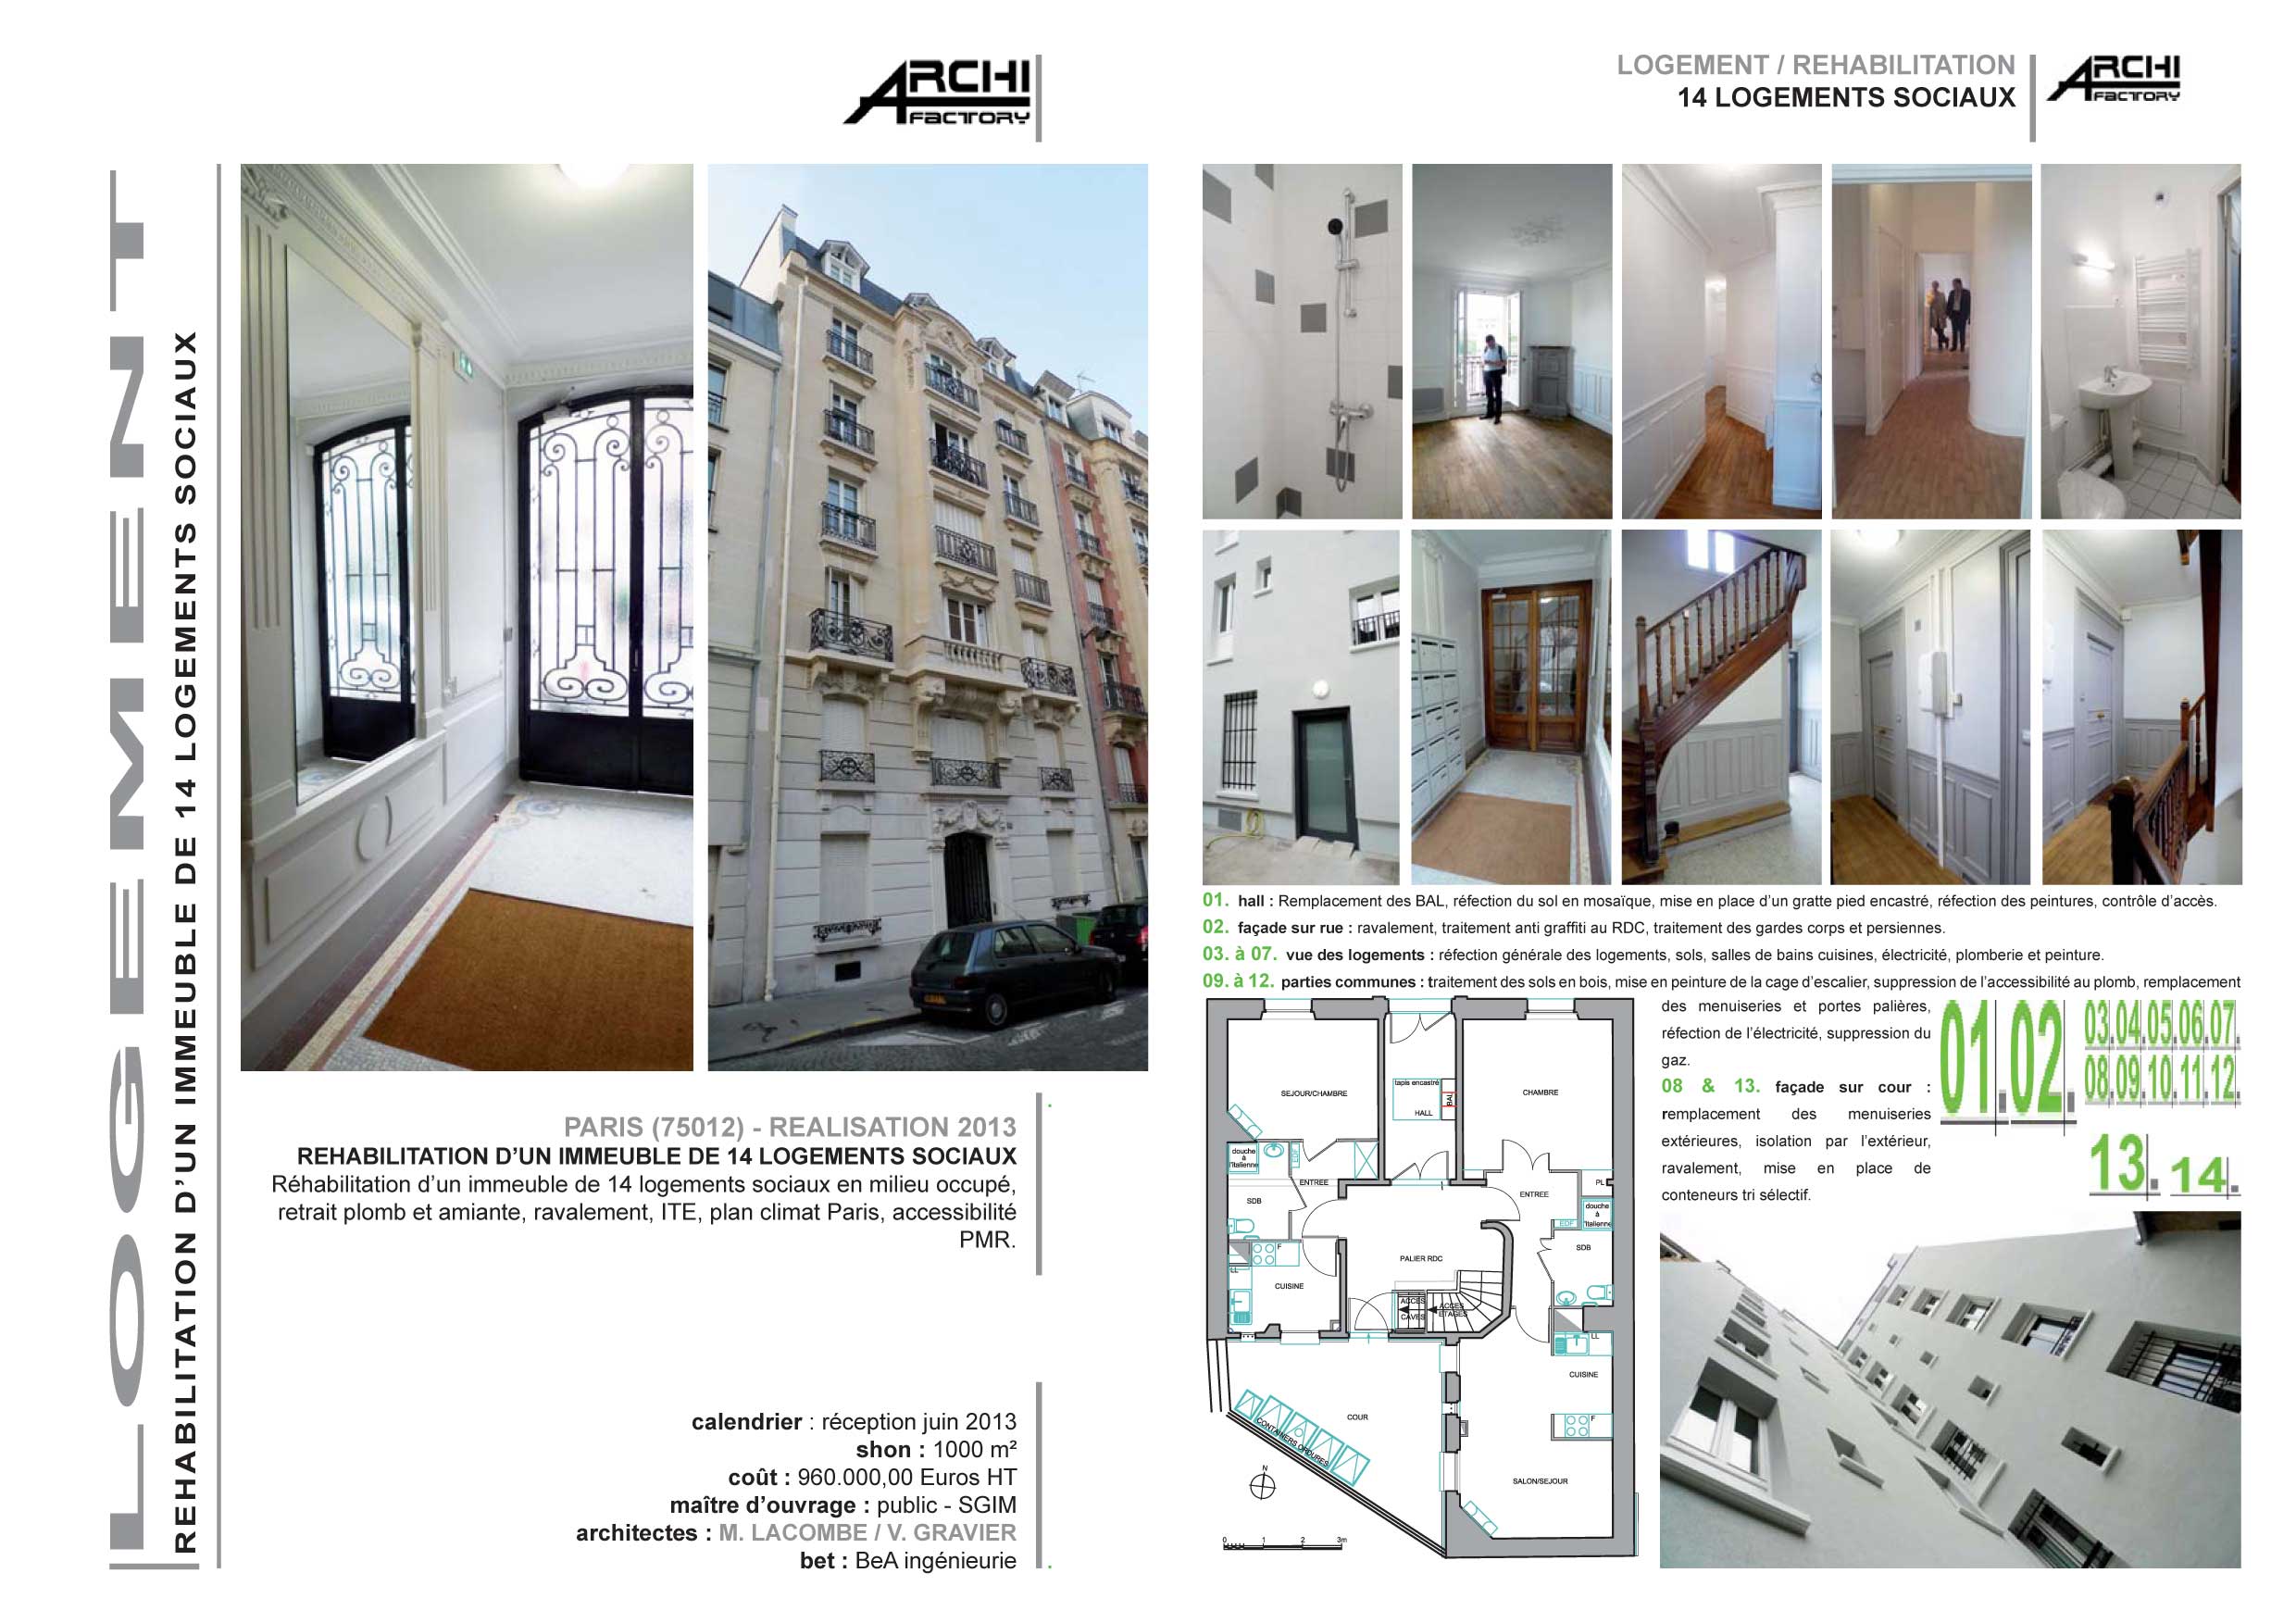 archifactory architectes - marc lacombe - projet lacoste